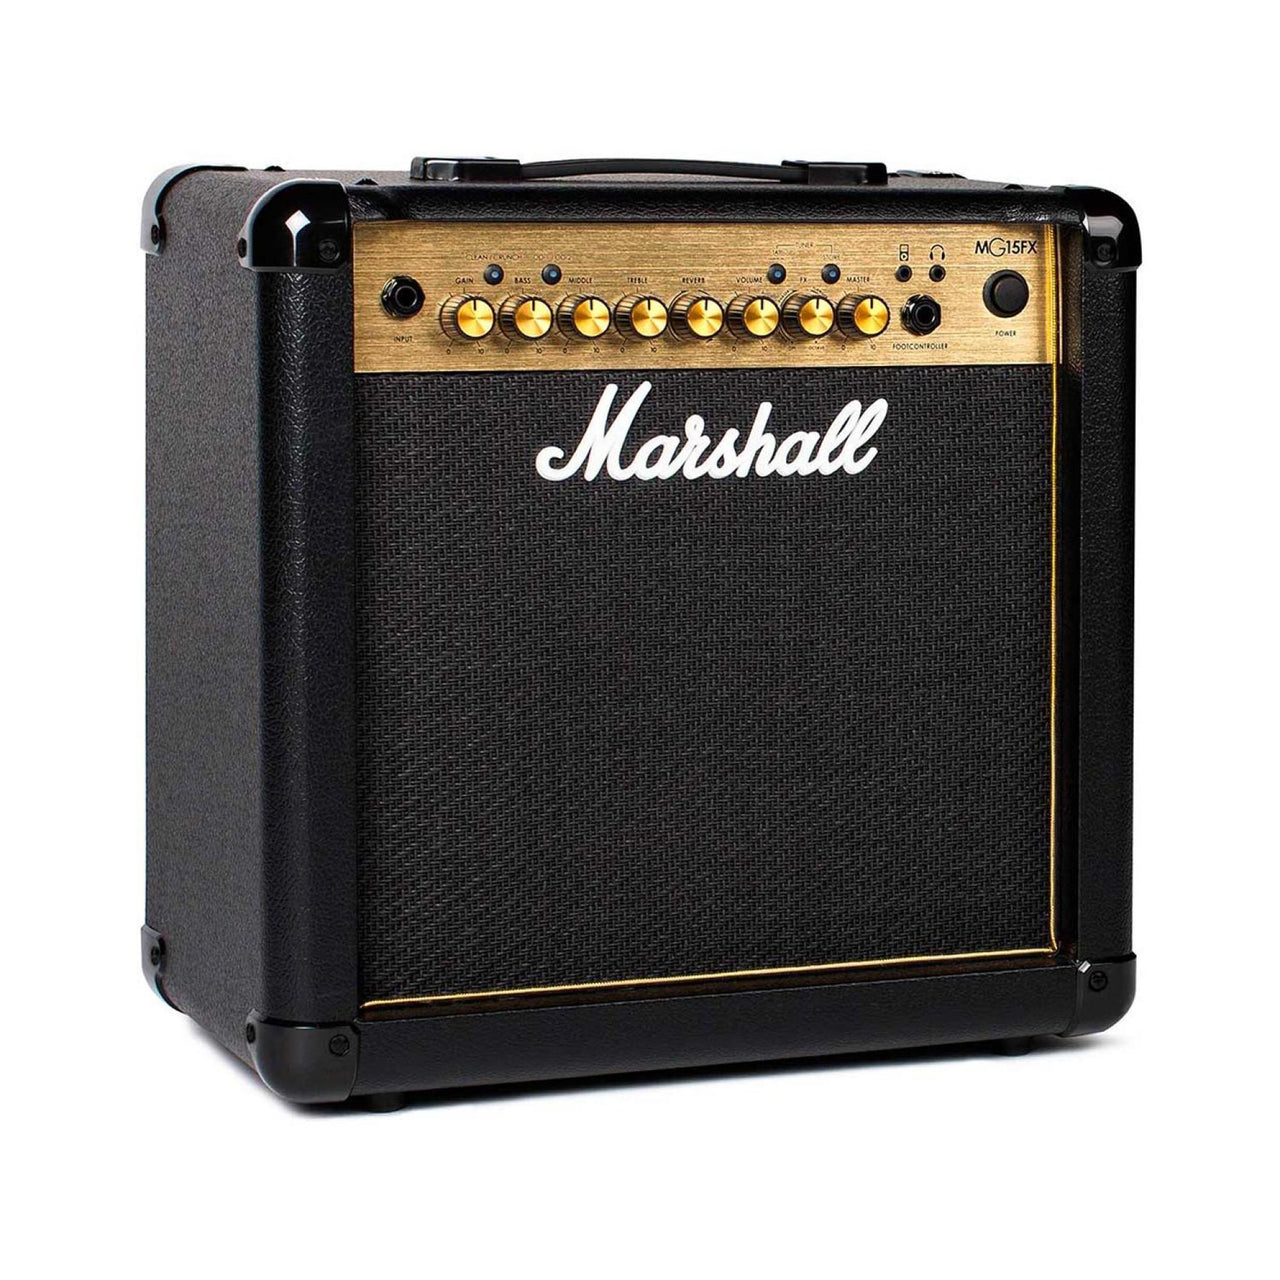 Amplificador Marshall Mg15g Mg Gold Para Guitarra 15w – Musicales Doris